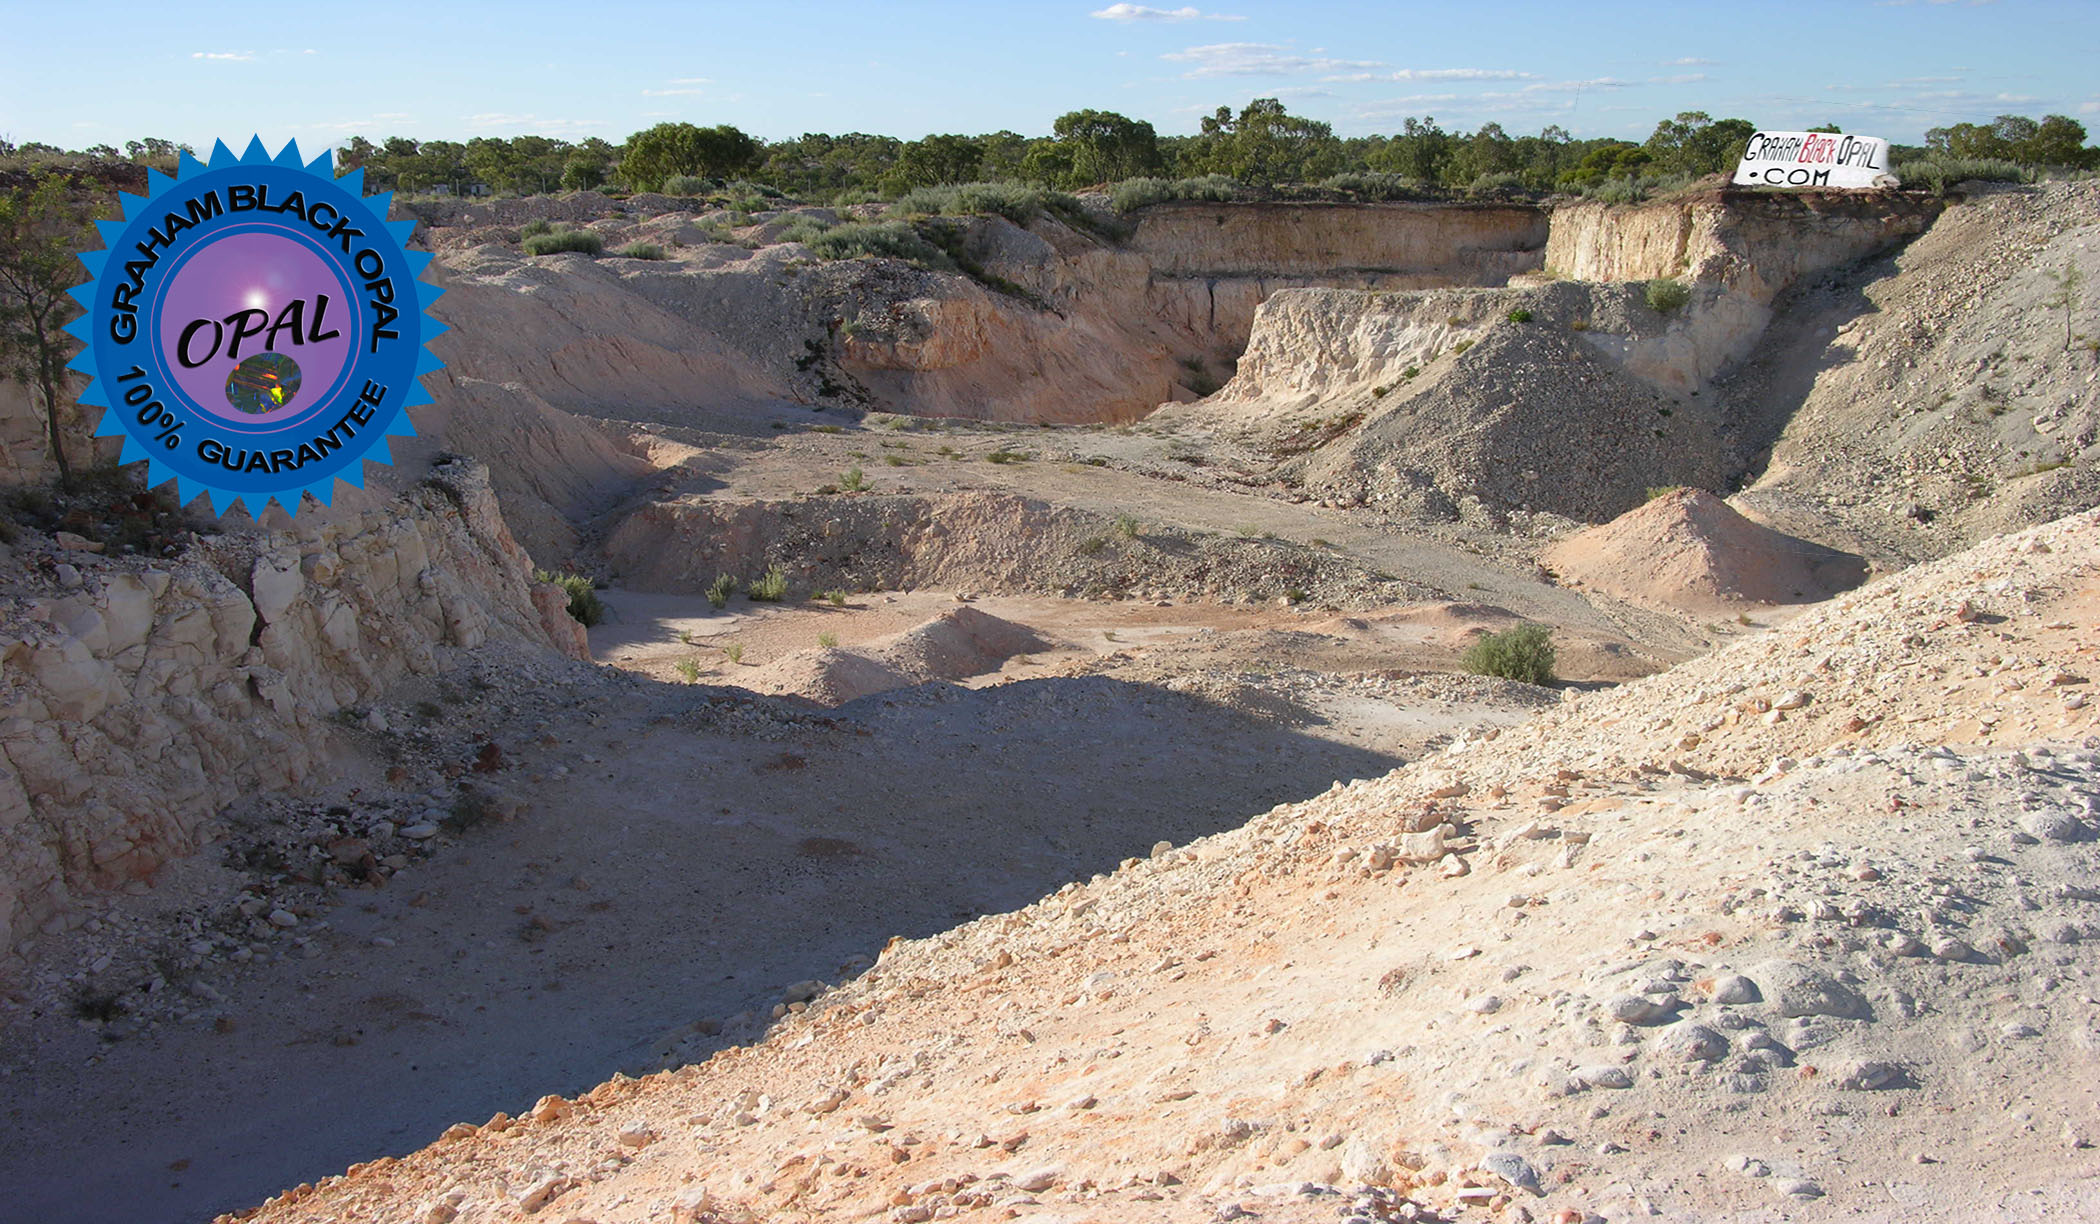 Opal mine graham's Australian State Heritage opal mine.